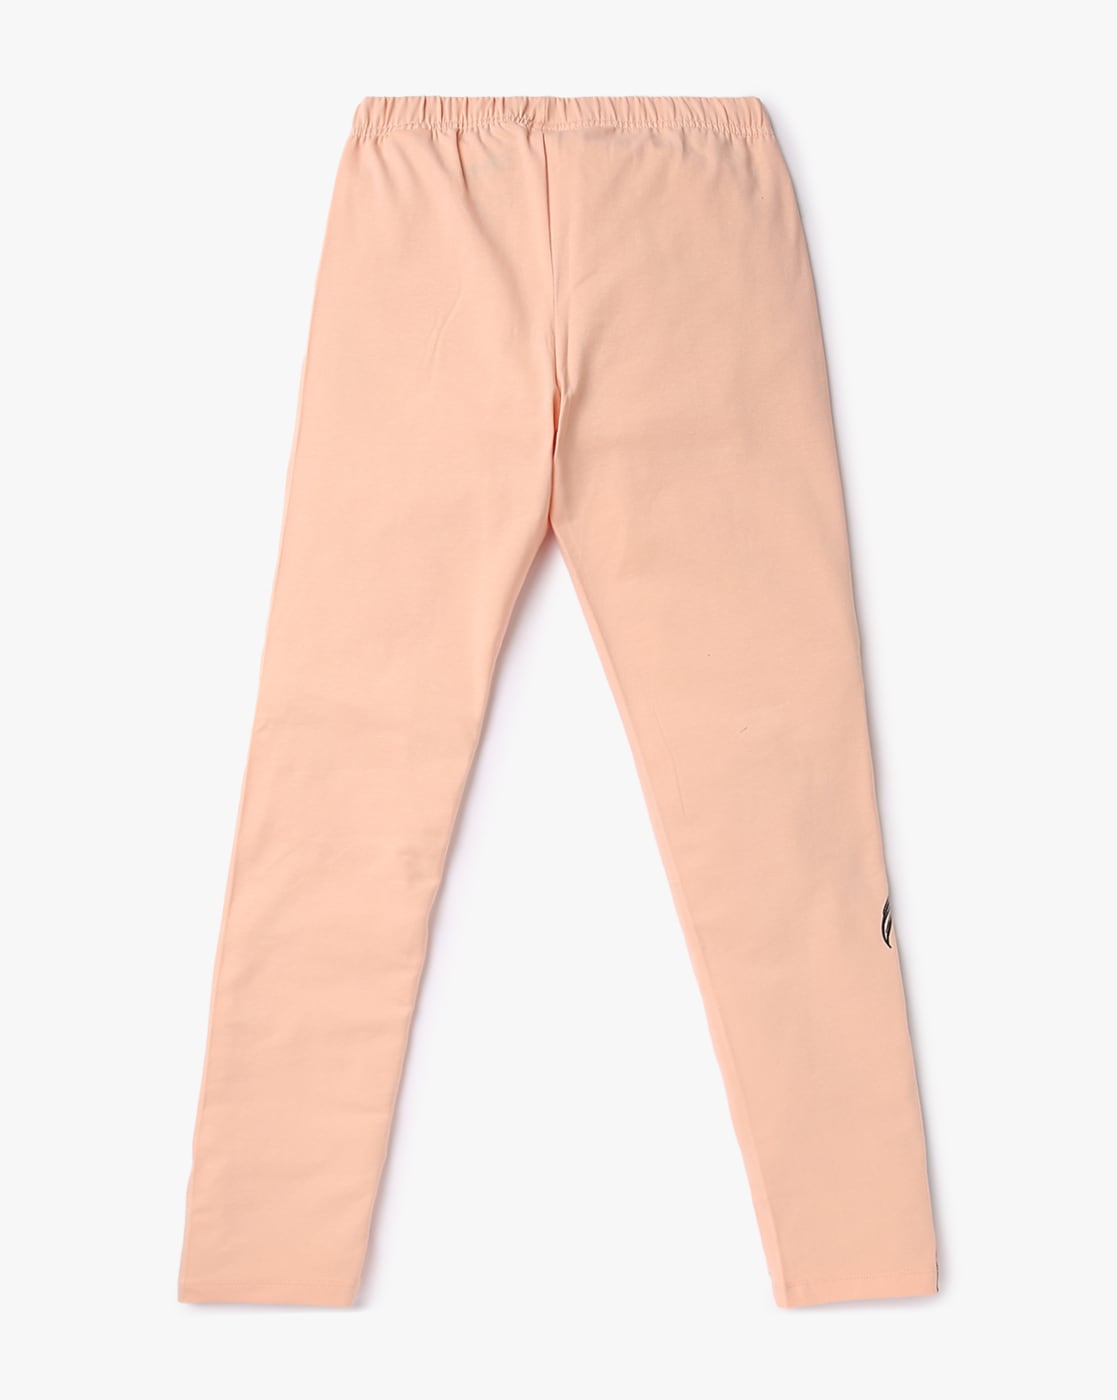 Pantaloons Junior Peach & Navy Printed Leggings (Pack of 2)